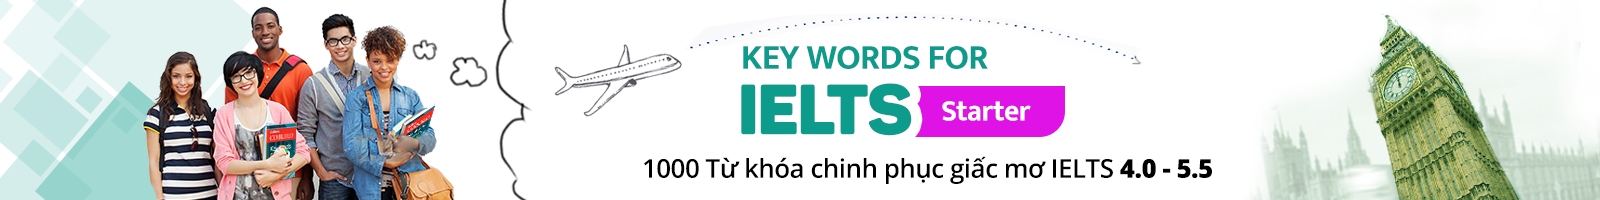 KEY WORDS FOR IELTS (Starter)